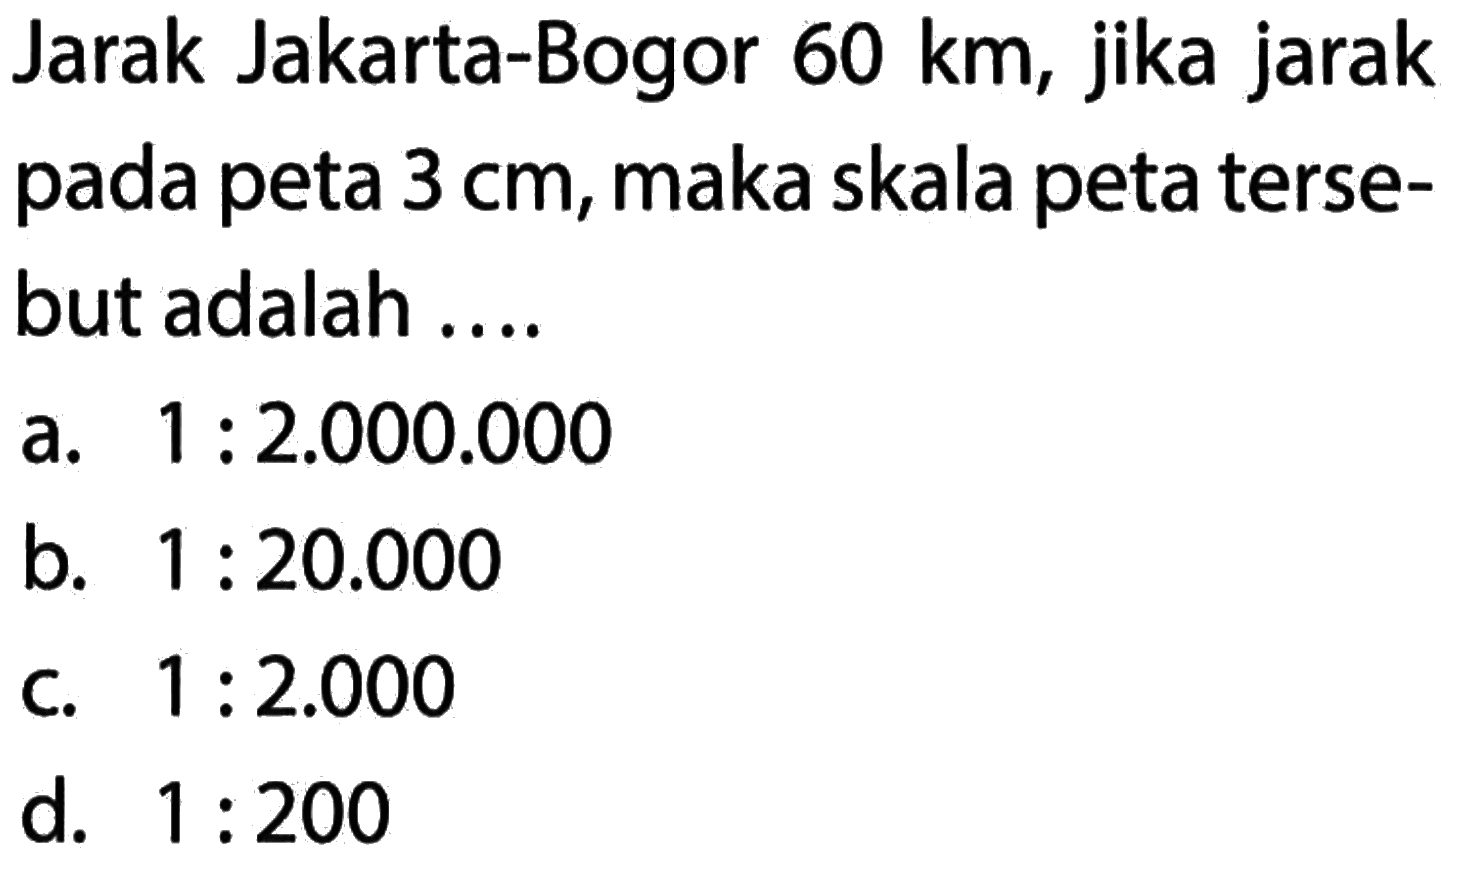 Jarak Jakarta-Bogor 60 km, jika jarak pada peta 3 cm, maka skala peta terse- but adalah